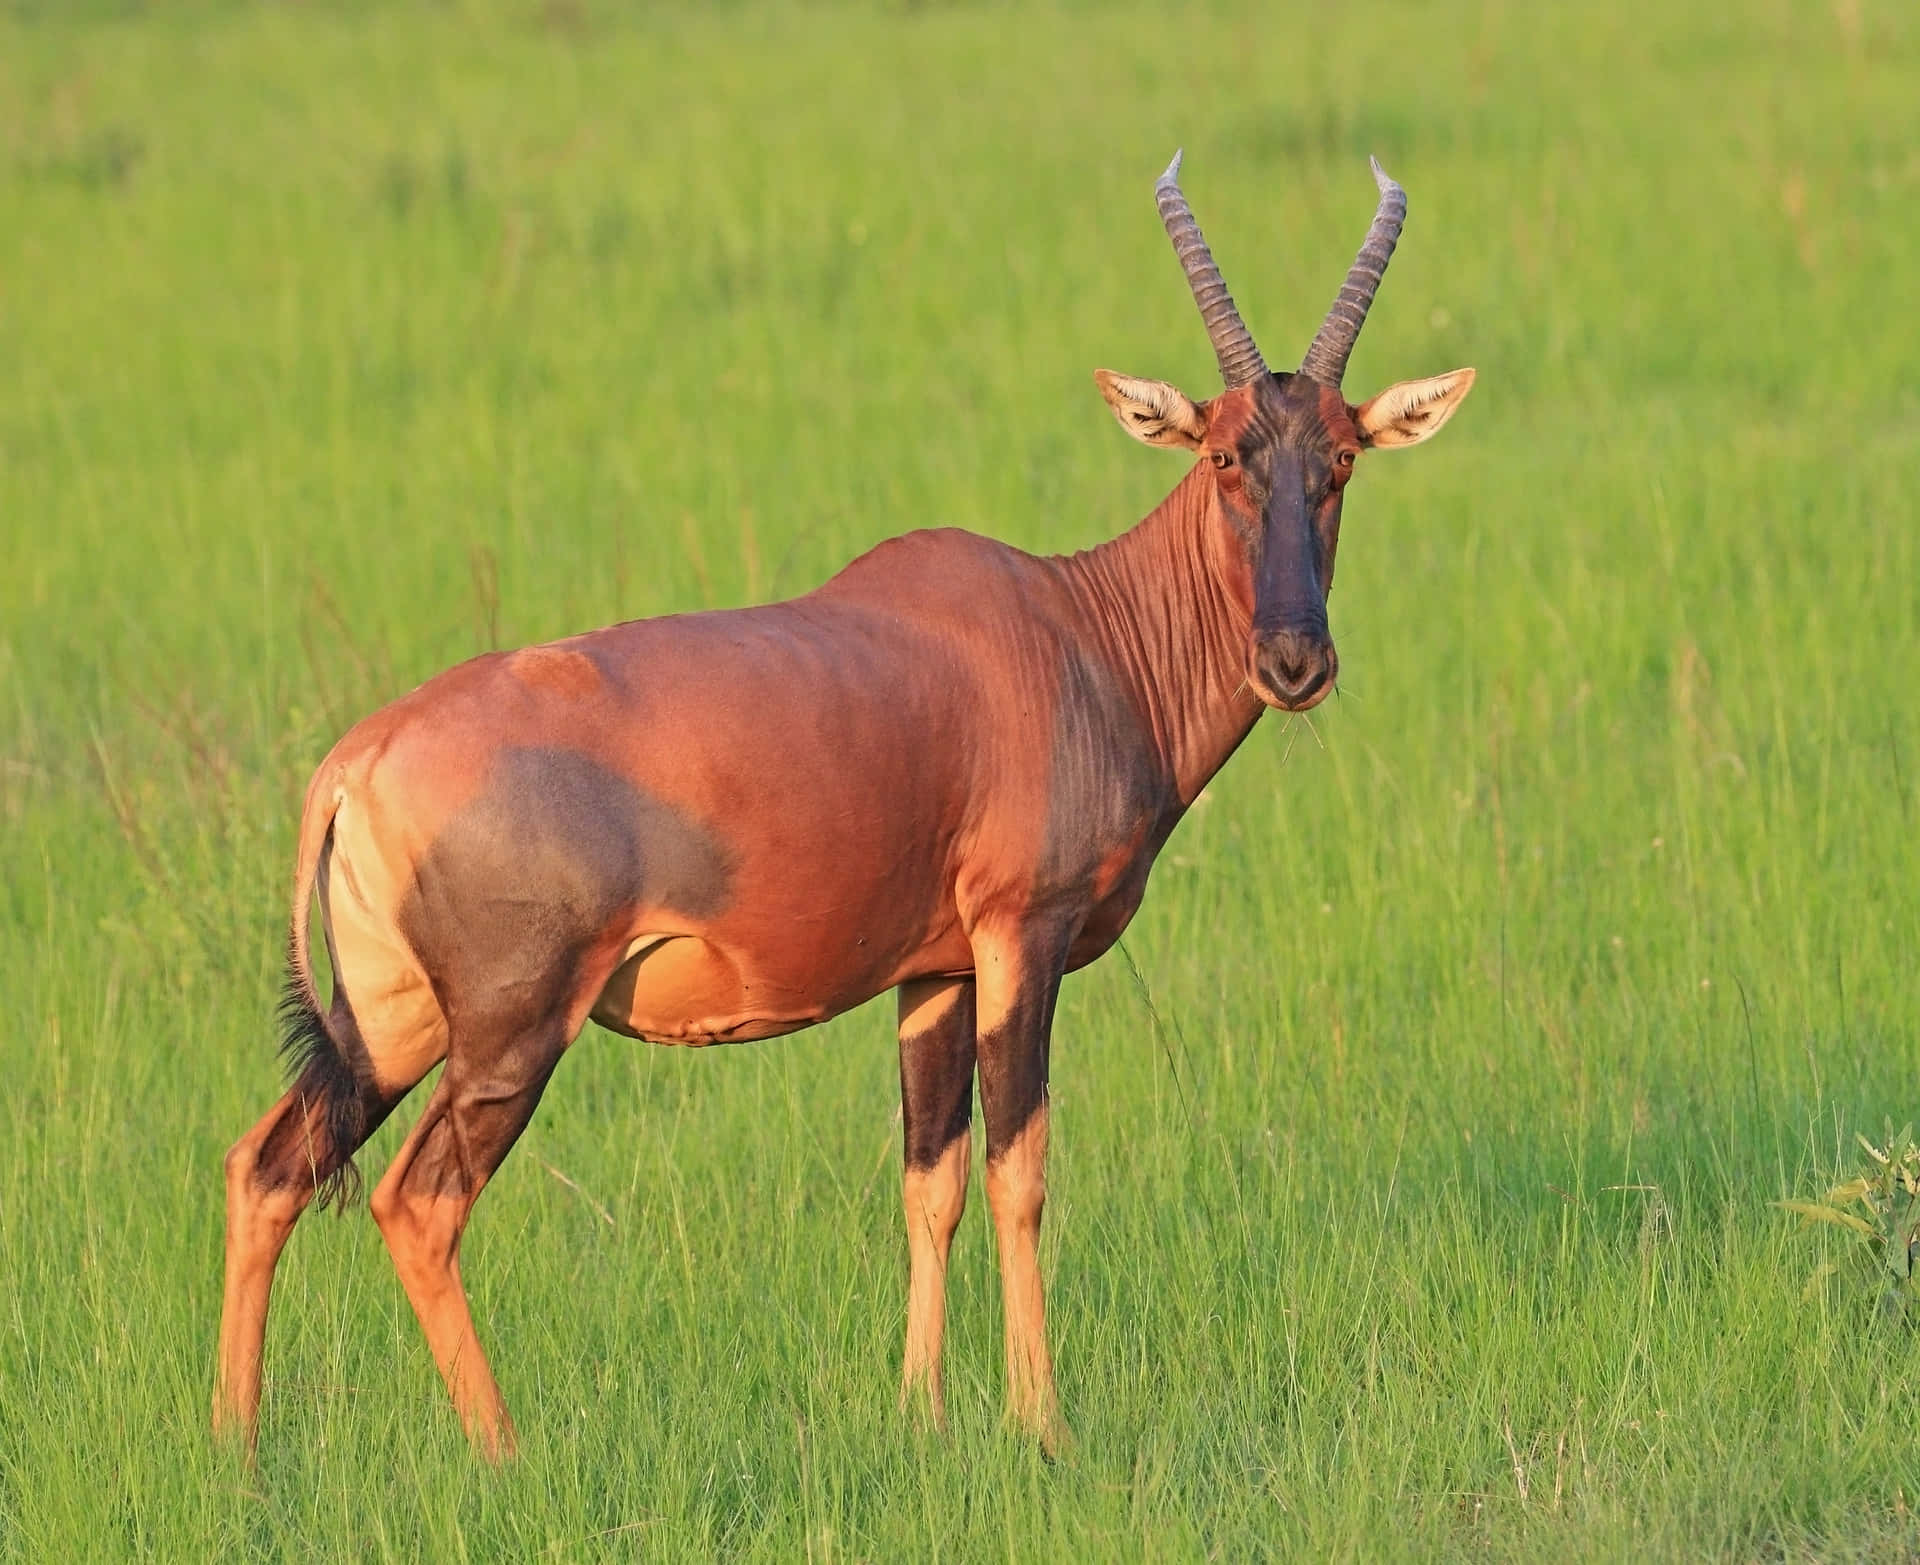 Topi Antelopein Savanna Grasslands Wallpaper